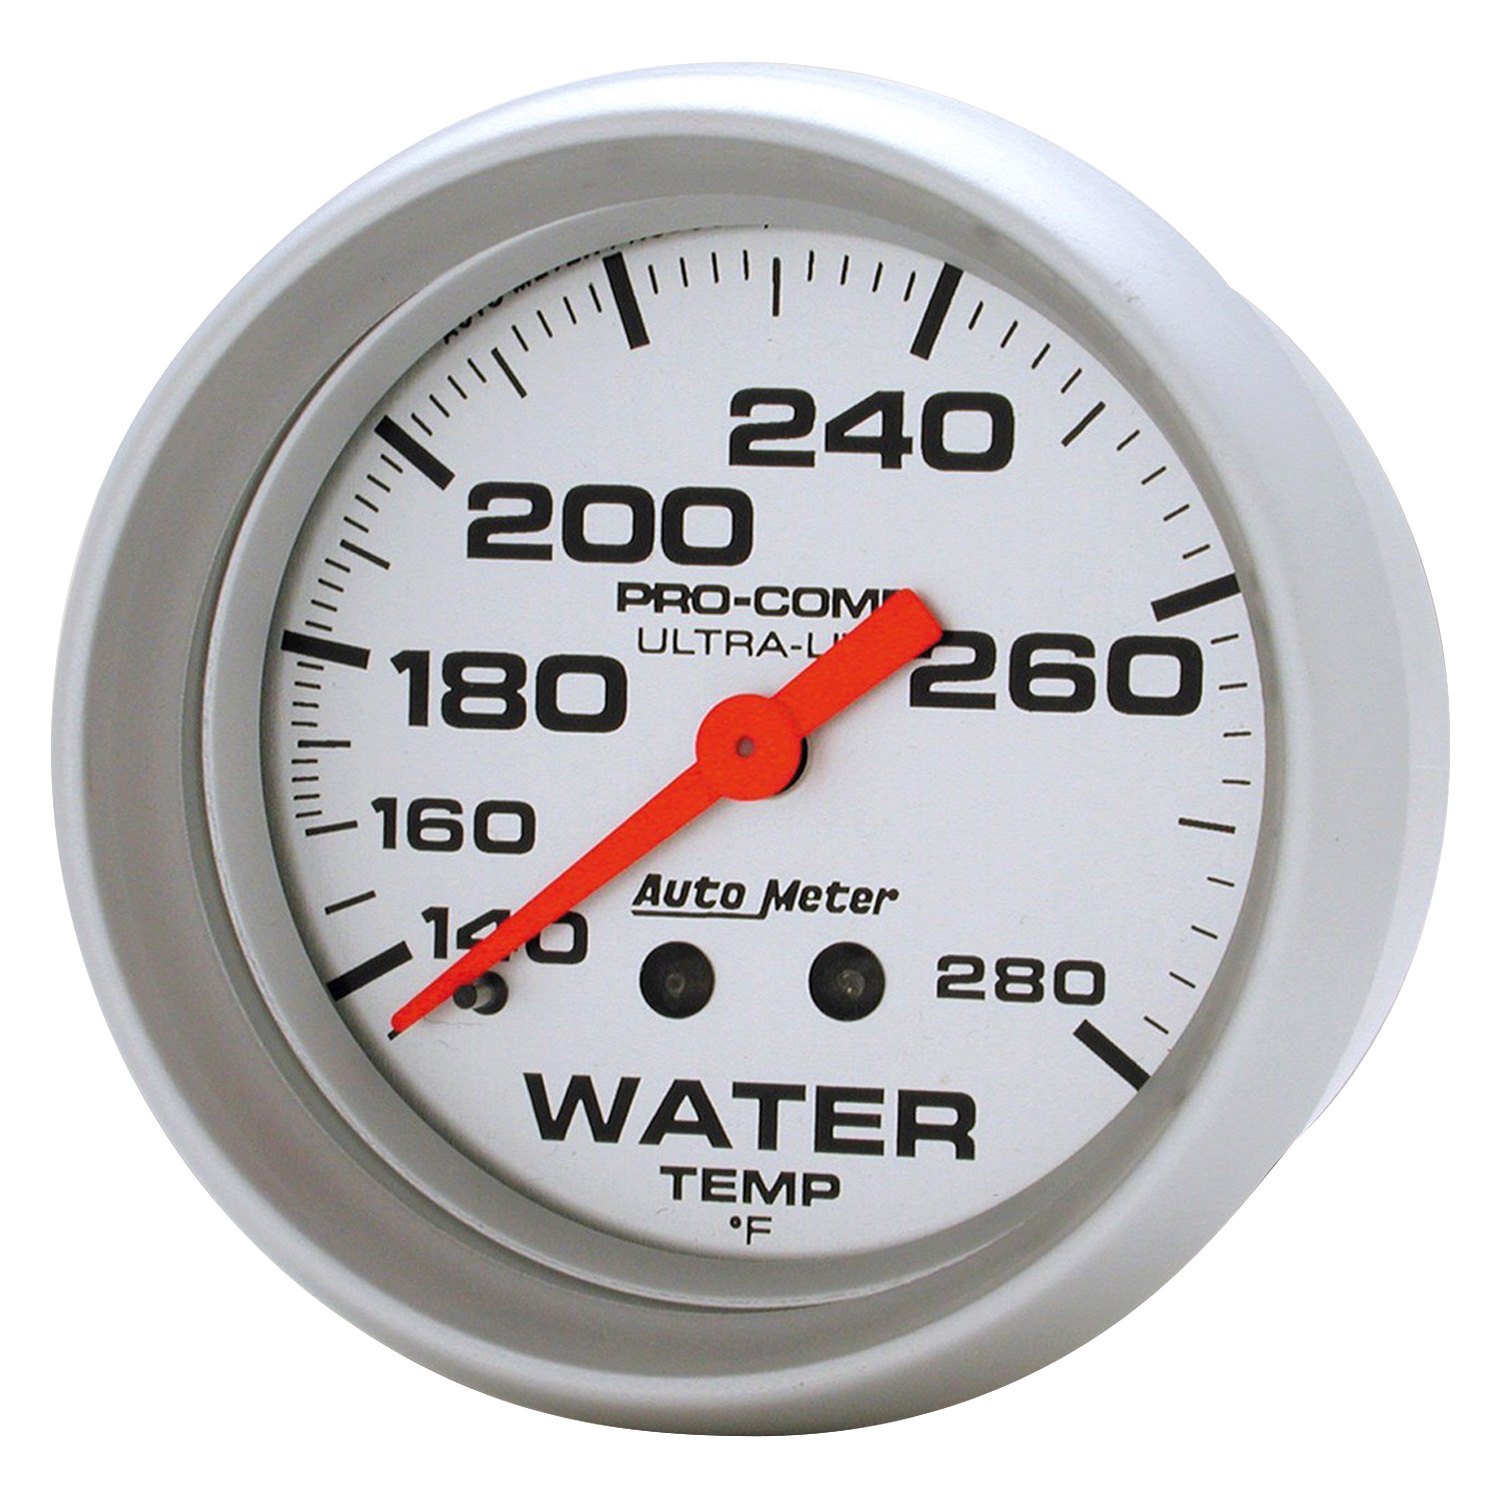 Temp p. Autometer. Auto Meter. Water Temp Gauge 270. Temperature Gauge.